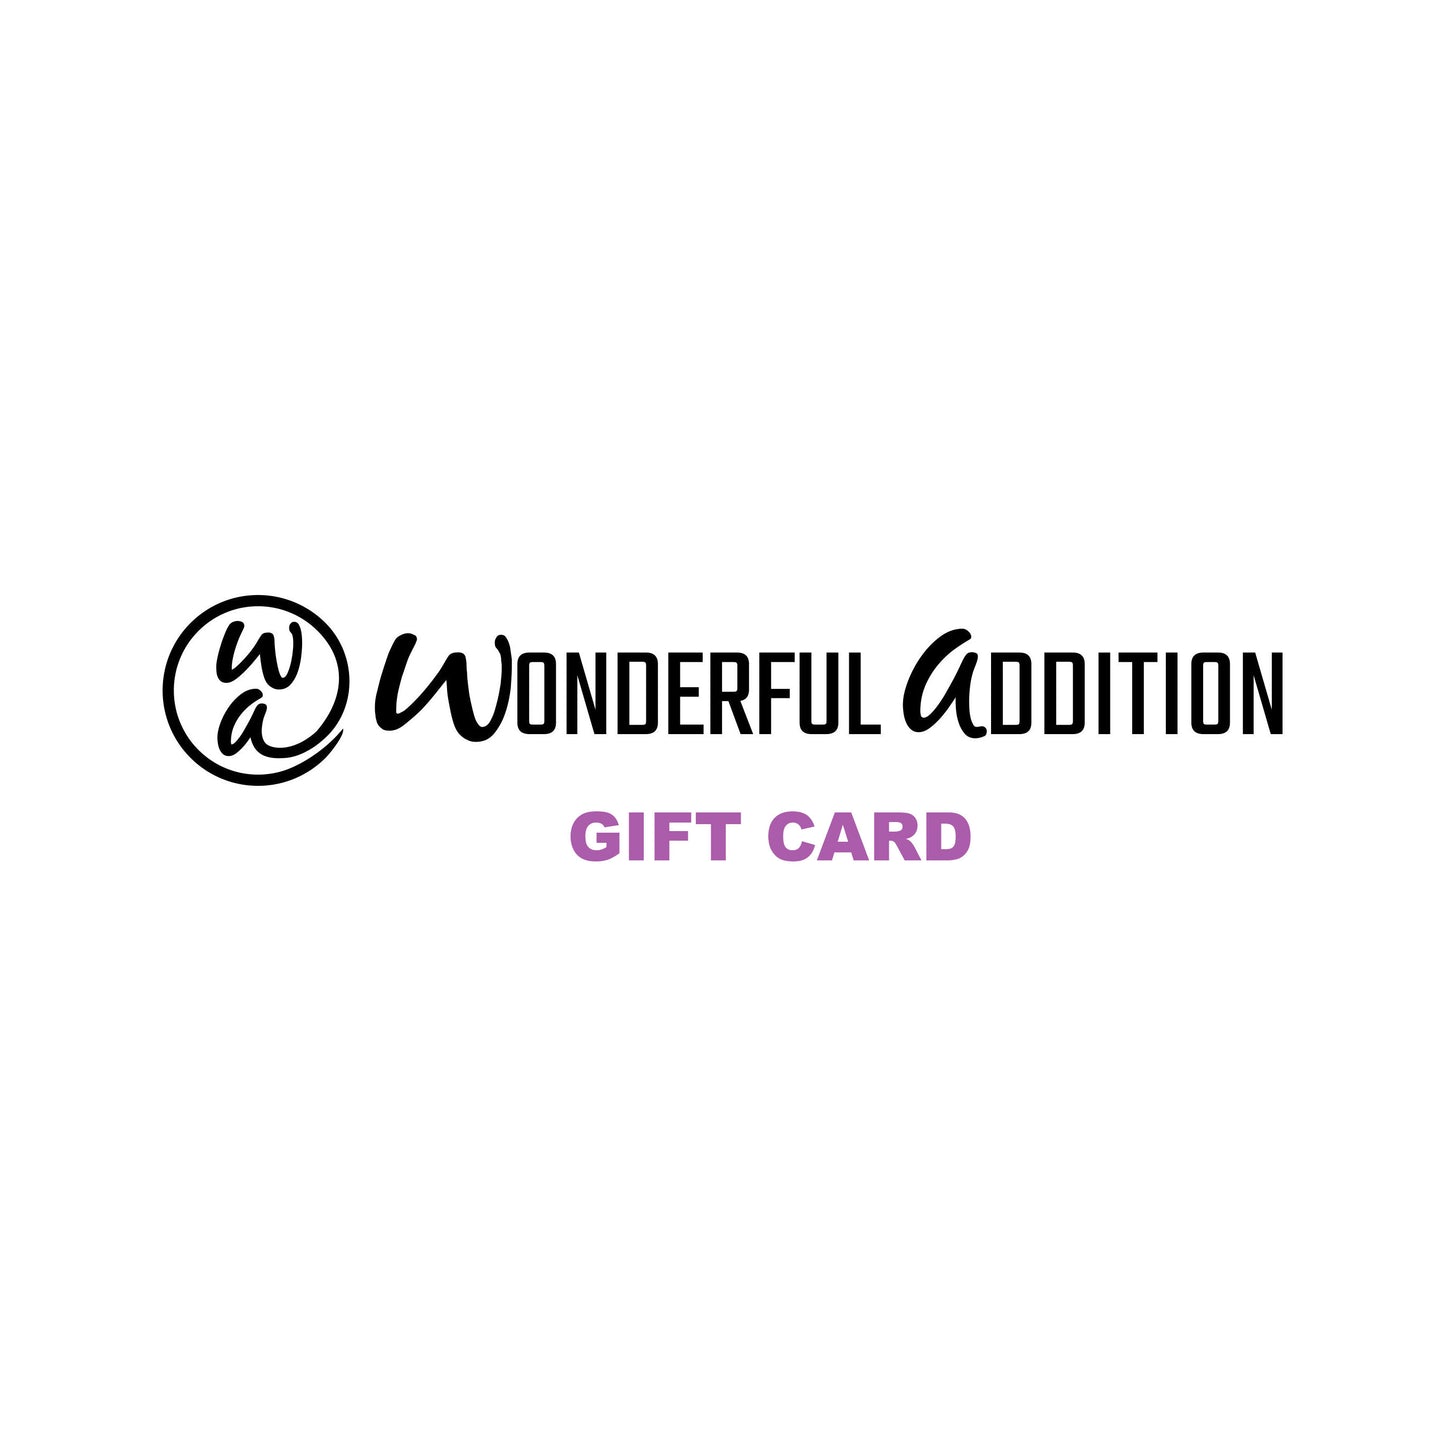 Gift Cards - $15.00 - Wonderful Addition